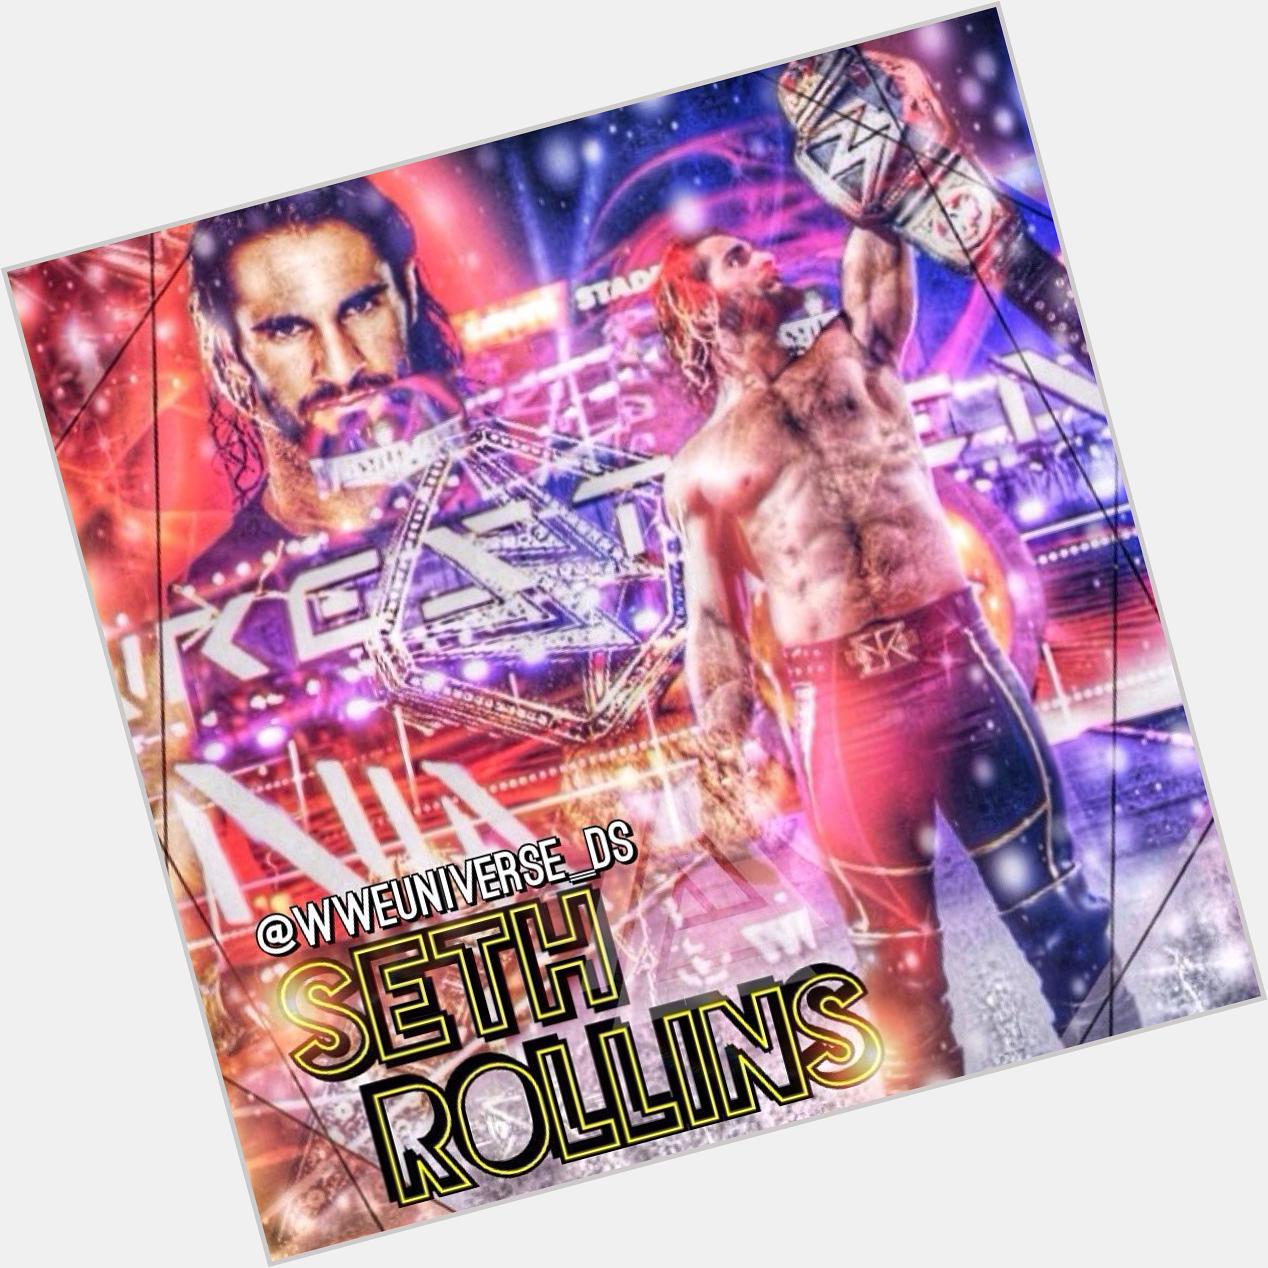 Happy 29th Birthday to the Champ, Seth Rollins!  